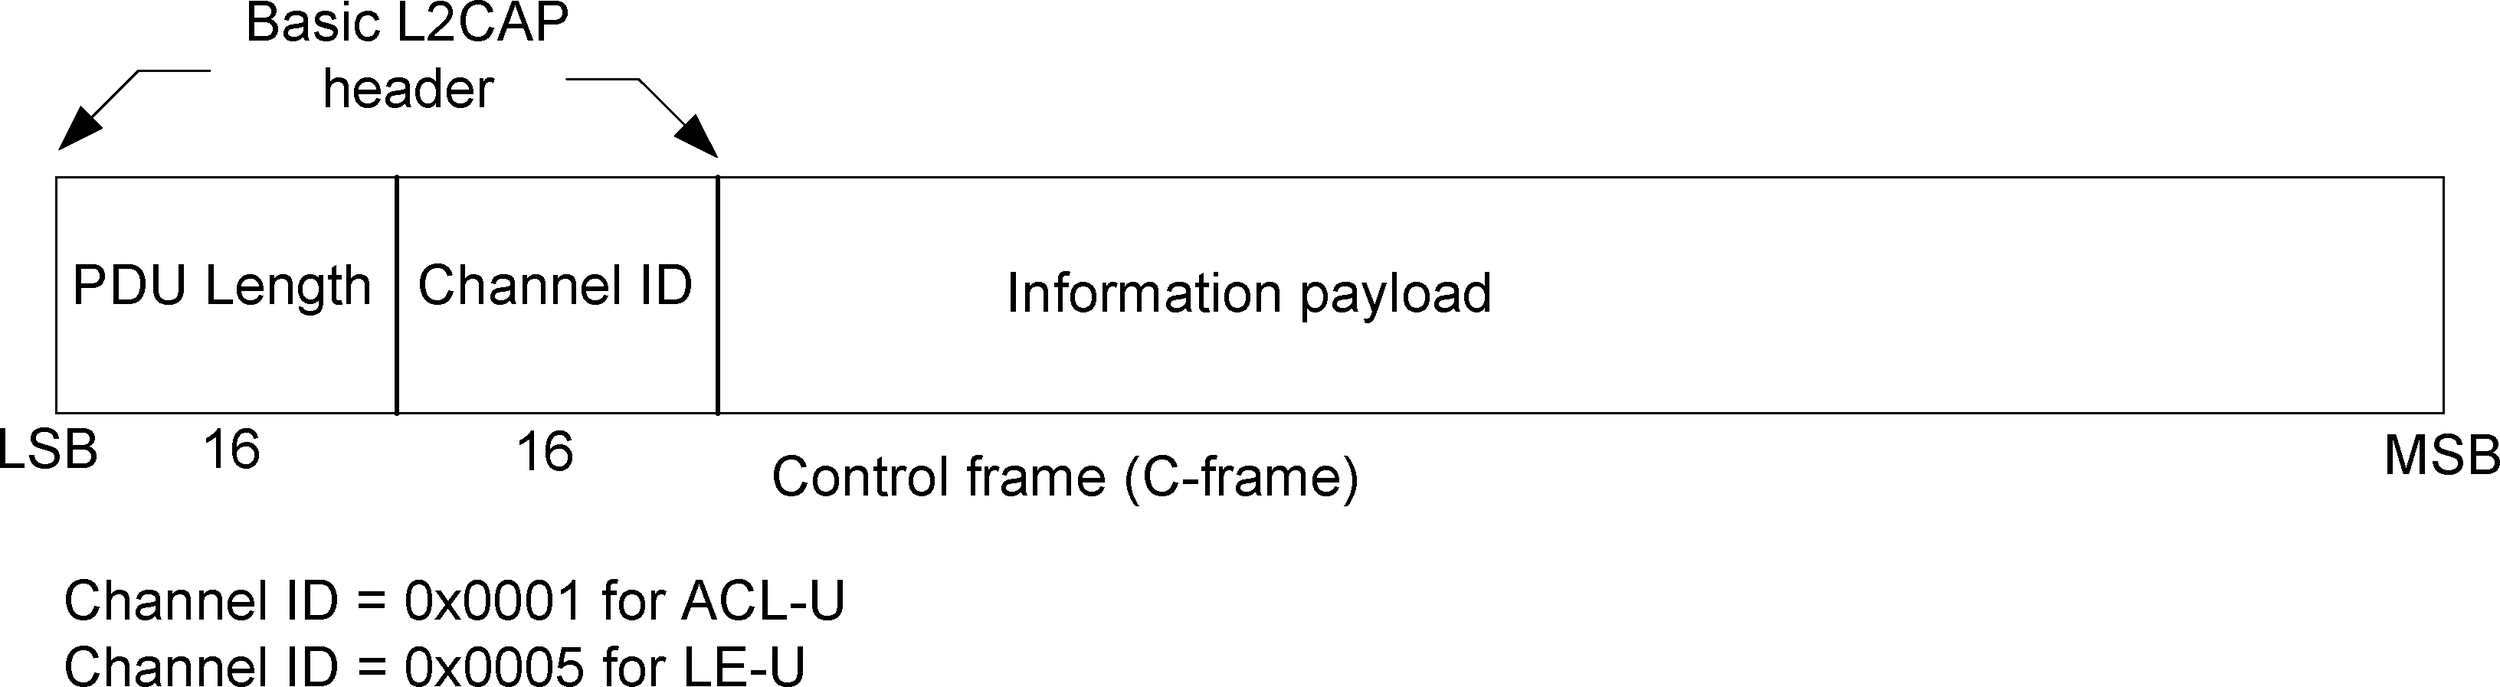 L2CAP PDU format on a signaling channel